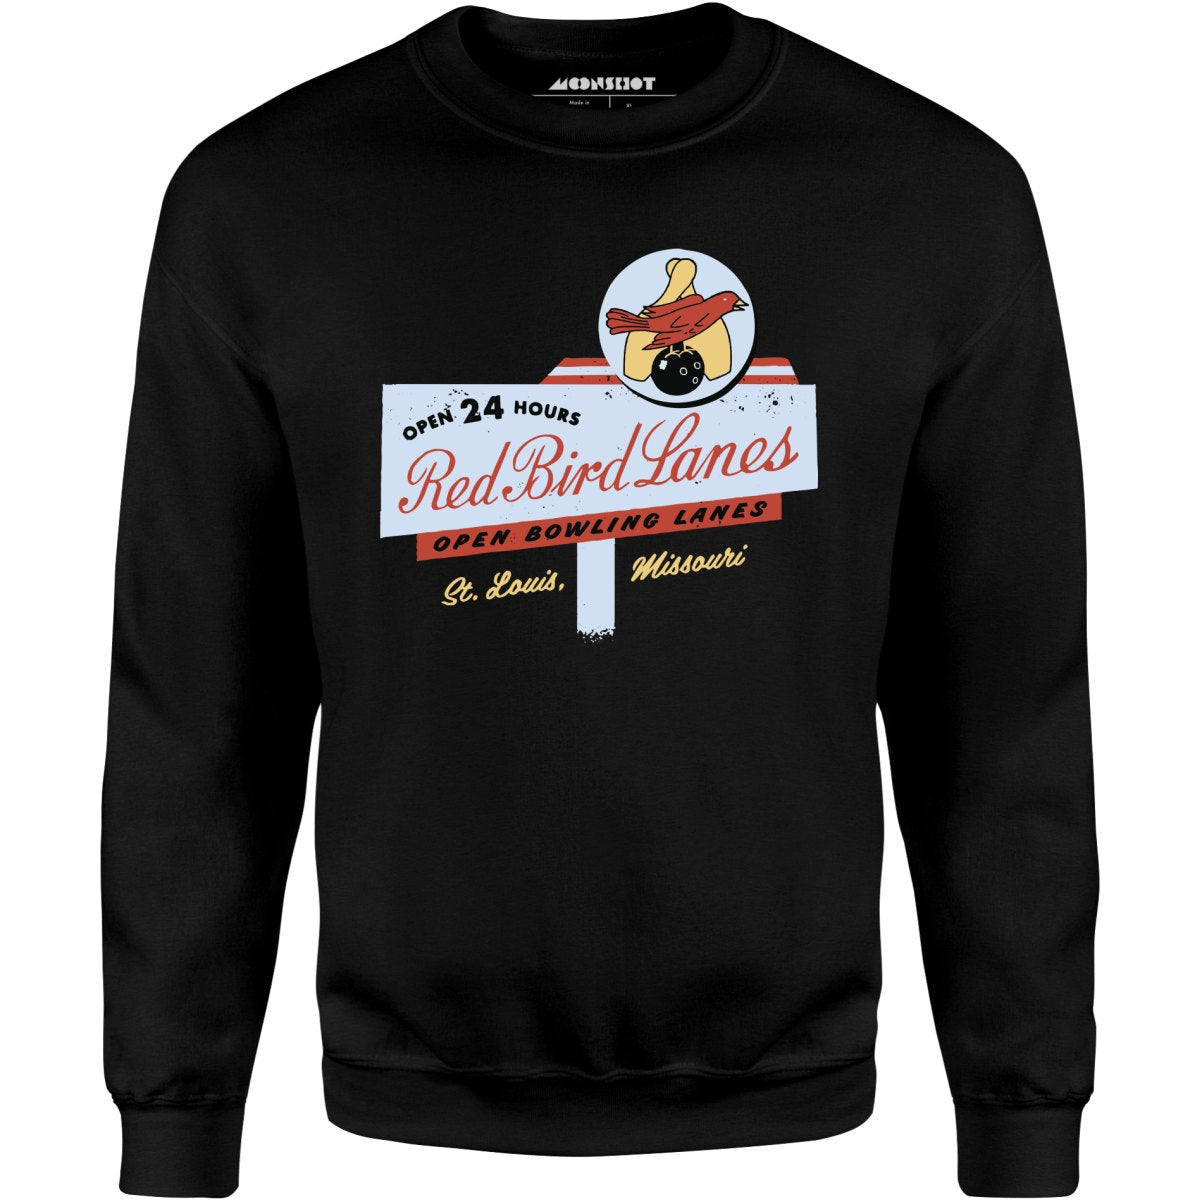 Red Bird Lanes v2 - St. Louis, MO - Vintage Bowling Alley - Unisex Sweatshirt